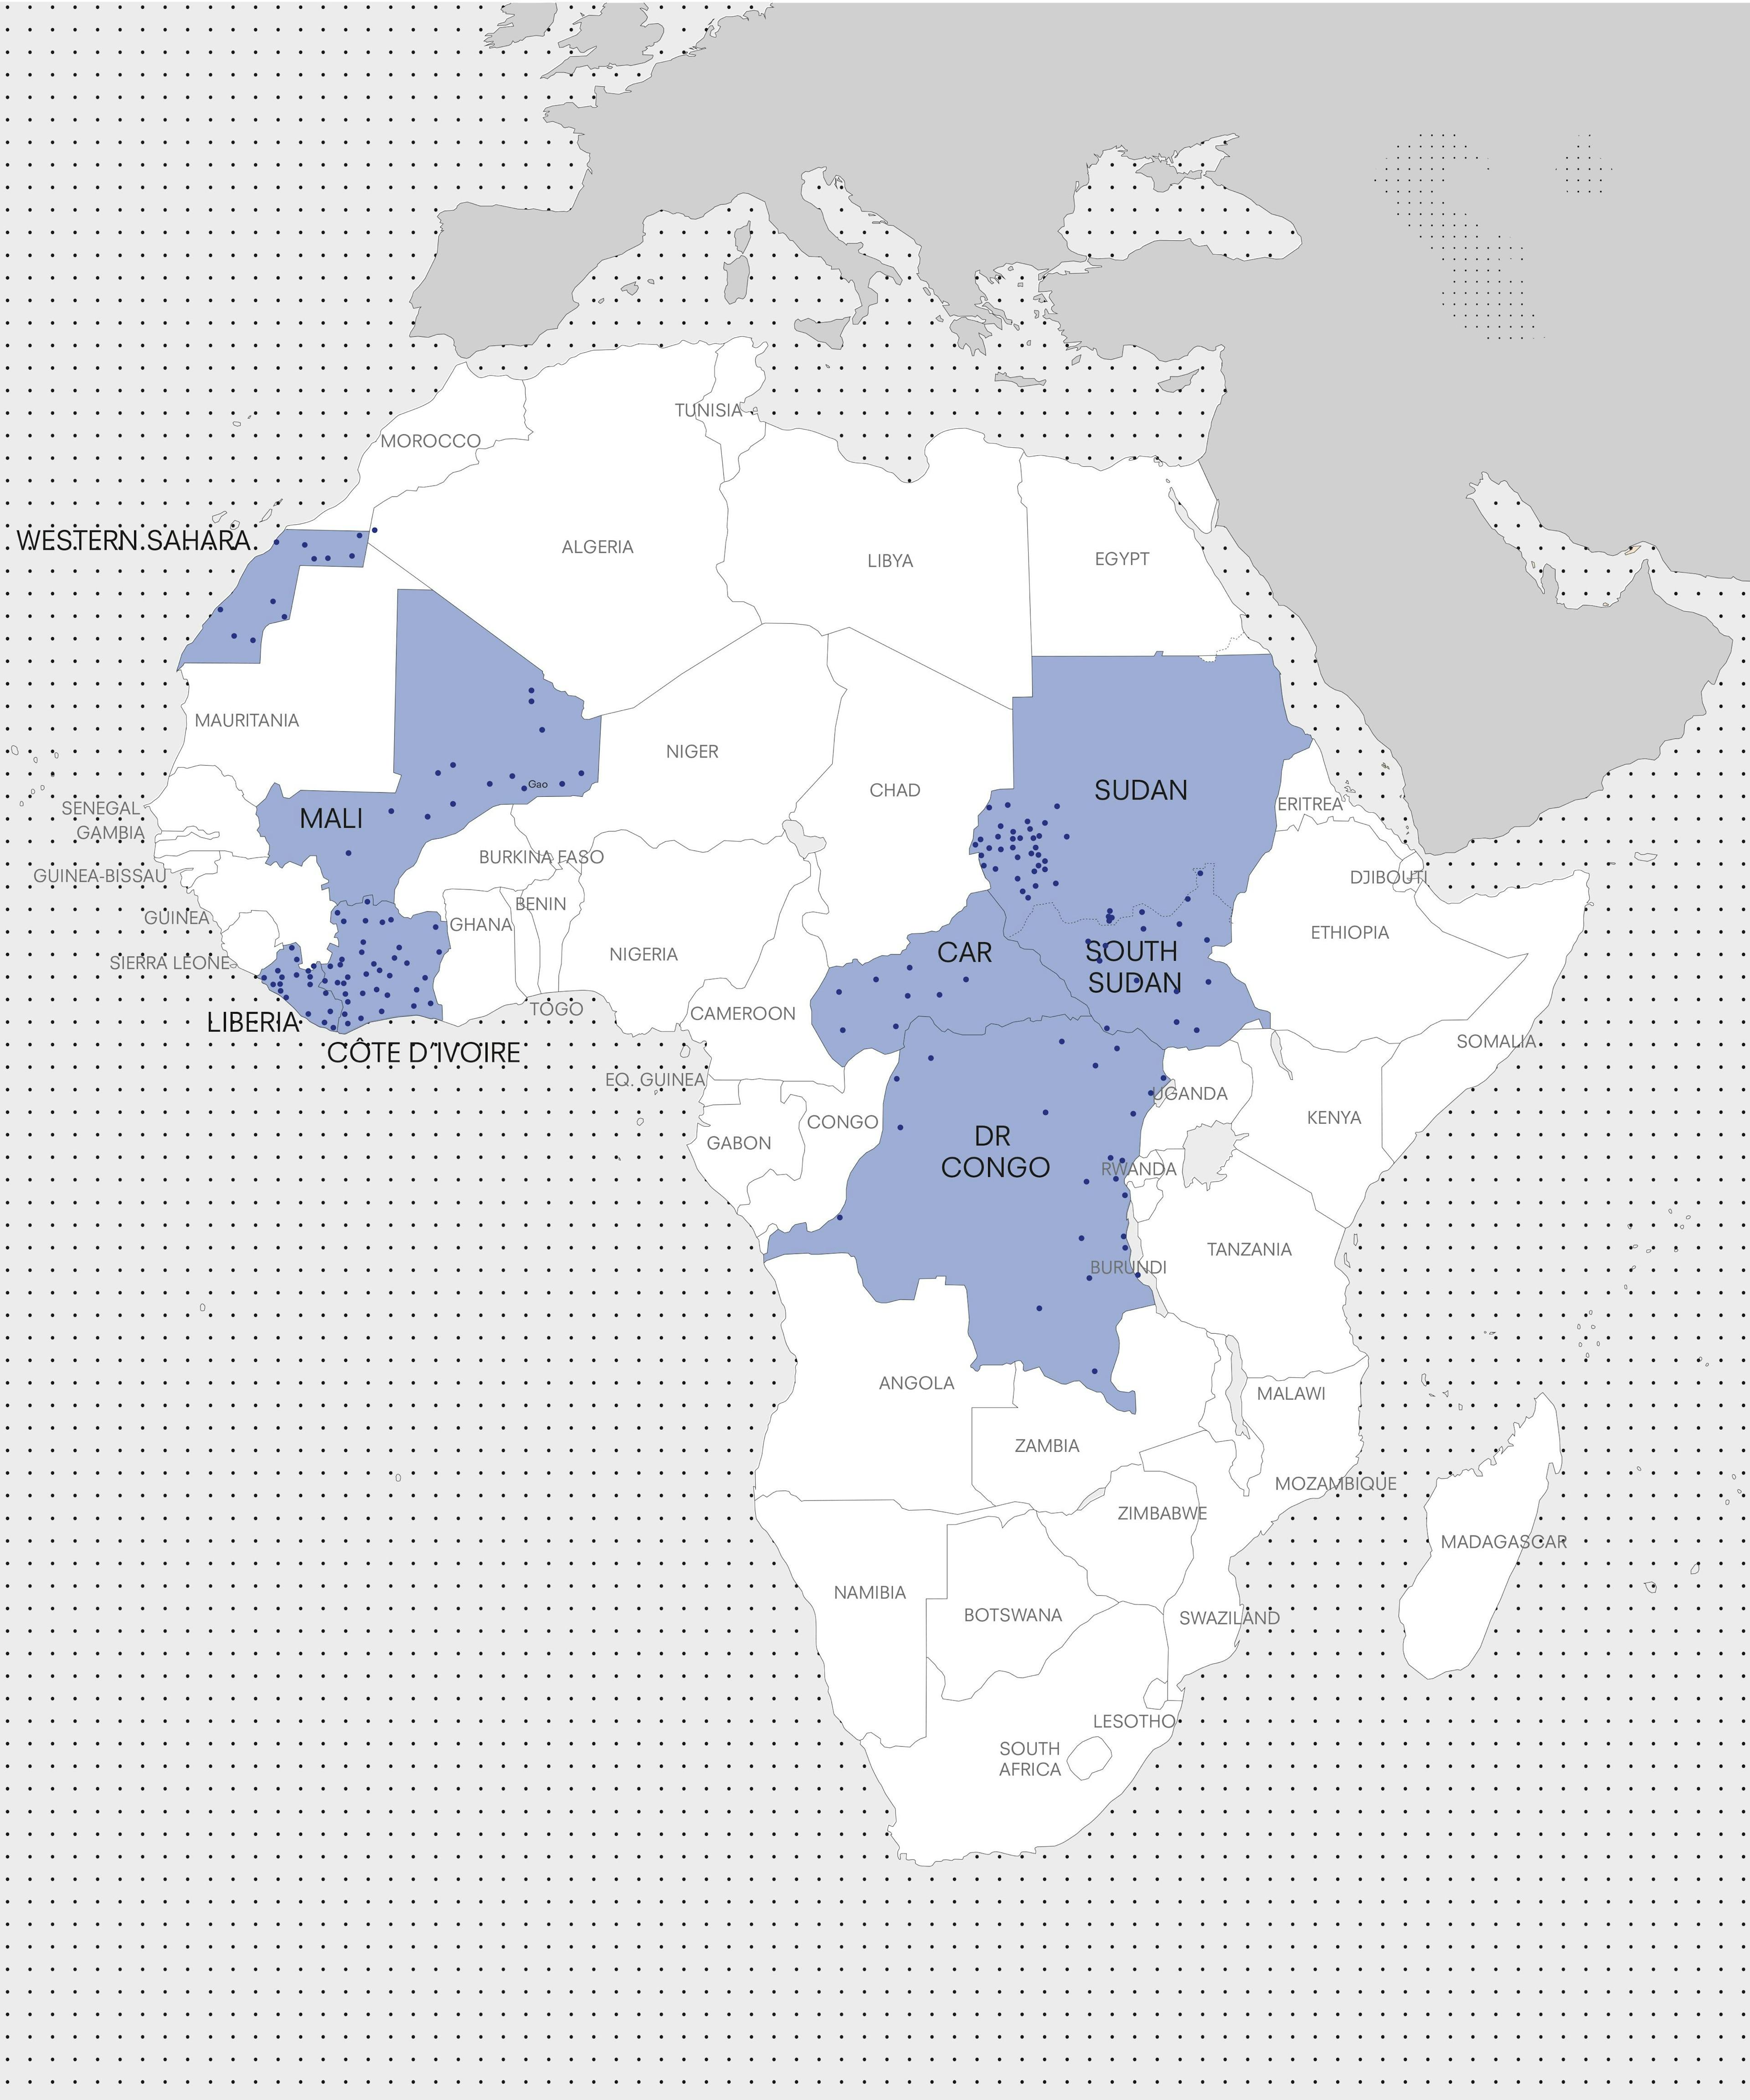 Steden met VN Vredesmissies basissen in Afrika 